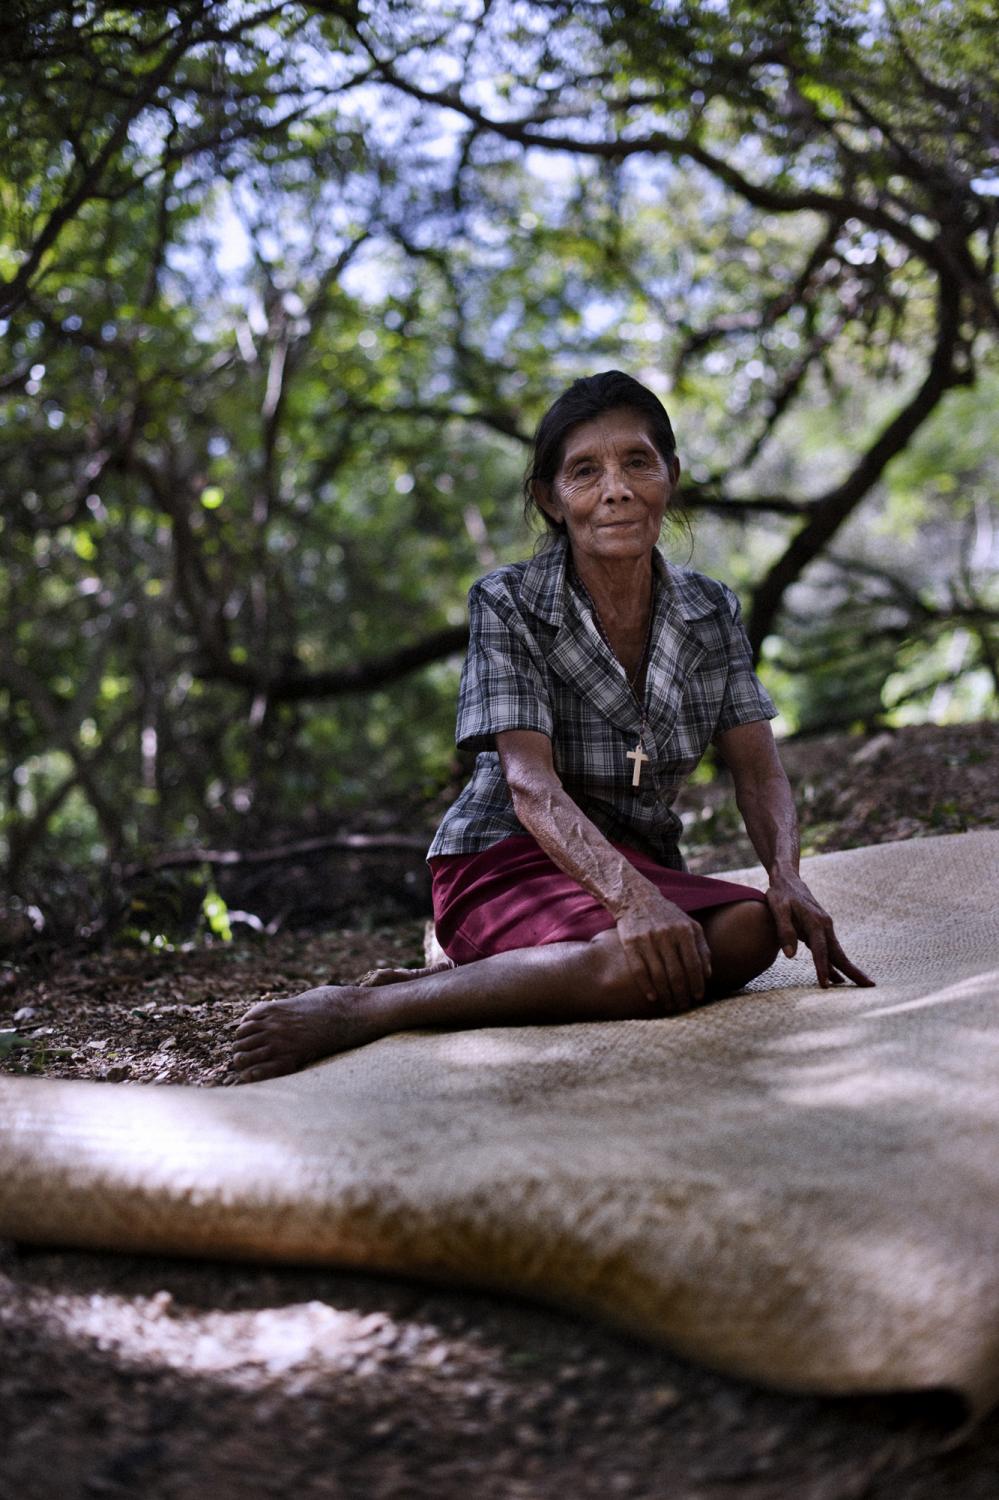 Microcredit / Central America - Somoto, Nicaragua.
October 2010.
Joaquina makes...